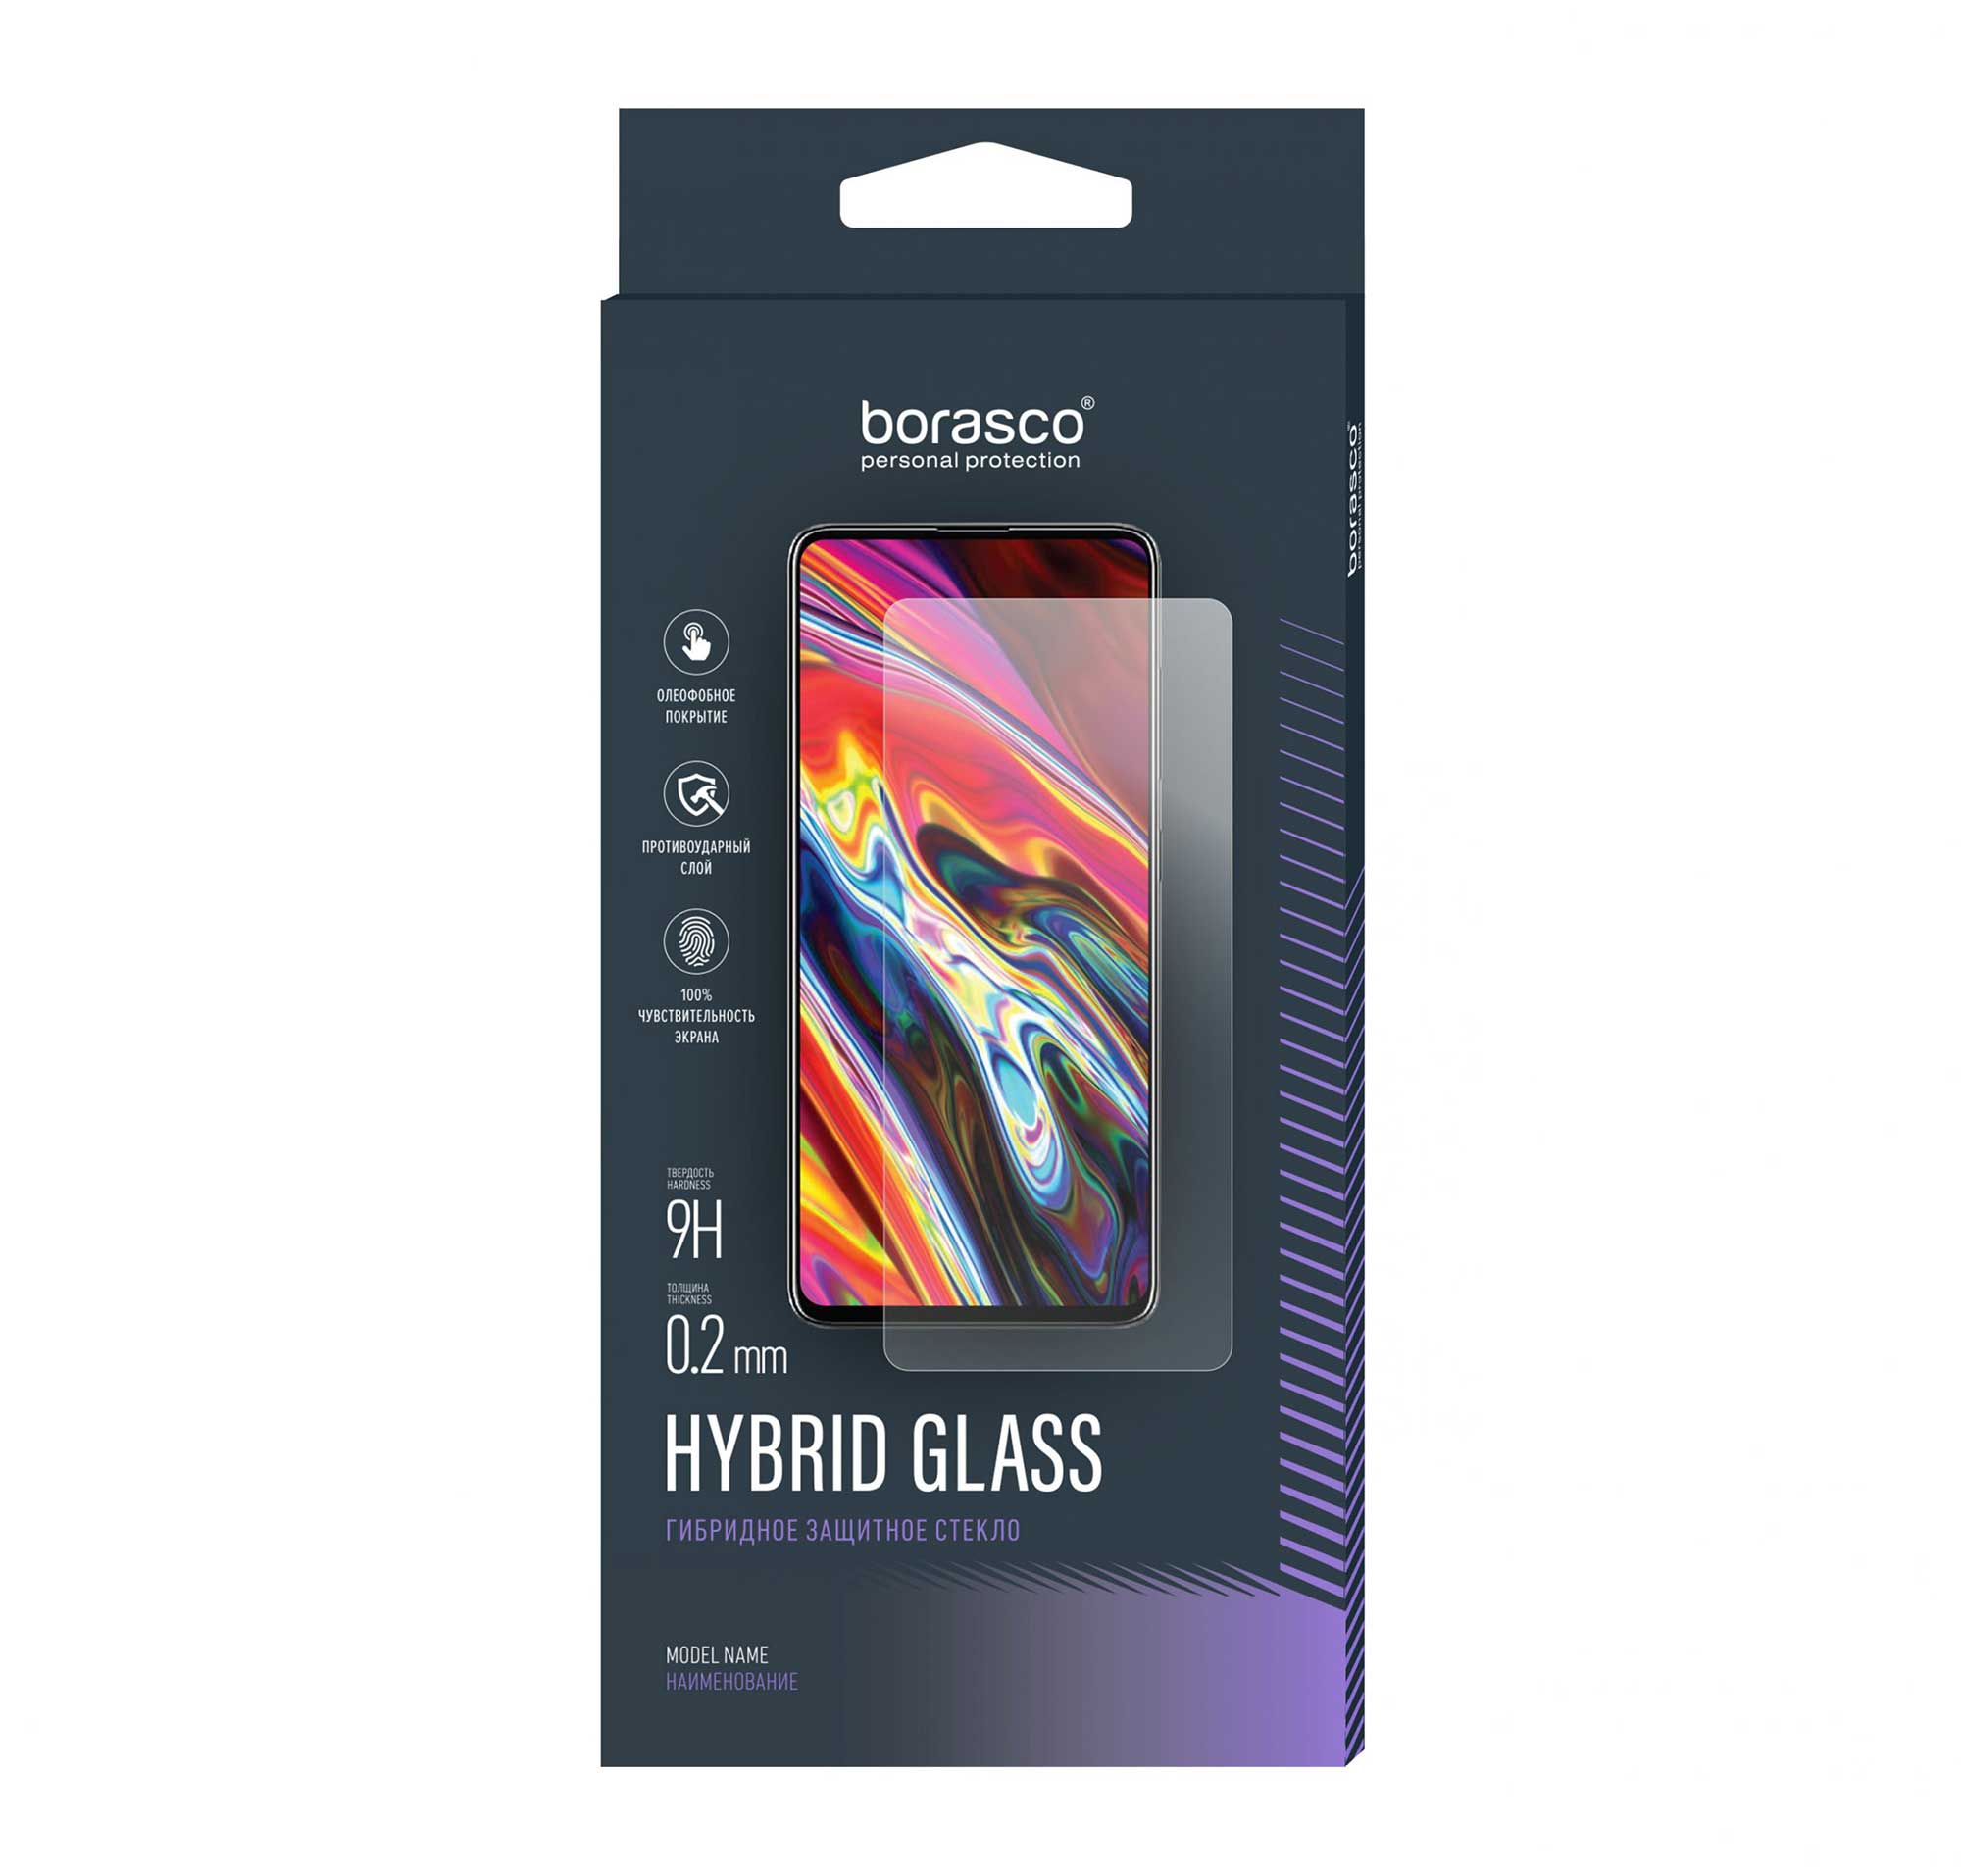 Защитное стекло Hybrid Glass для Huawei P40 защитное стекло для камеры hybrid glass для huawei p30 lite